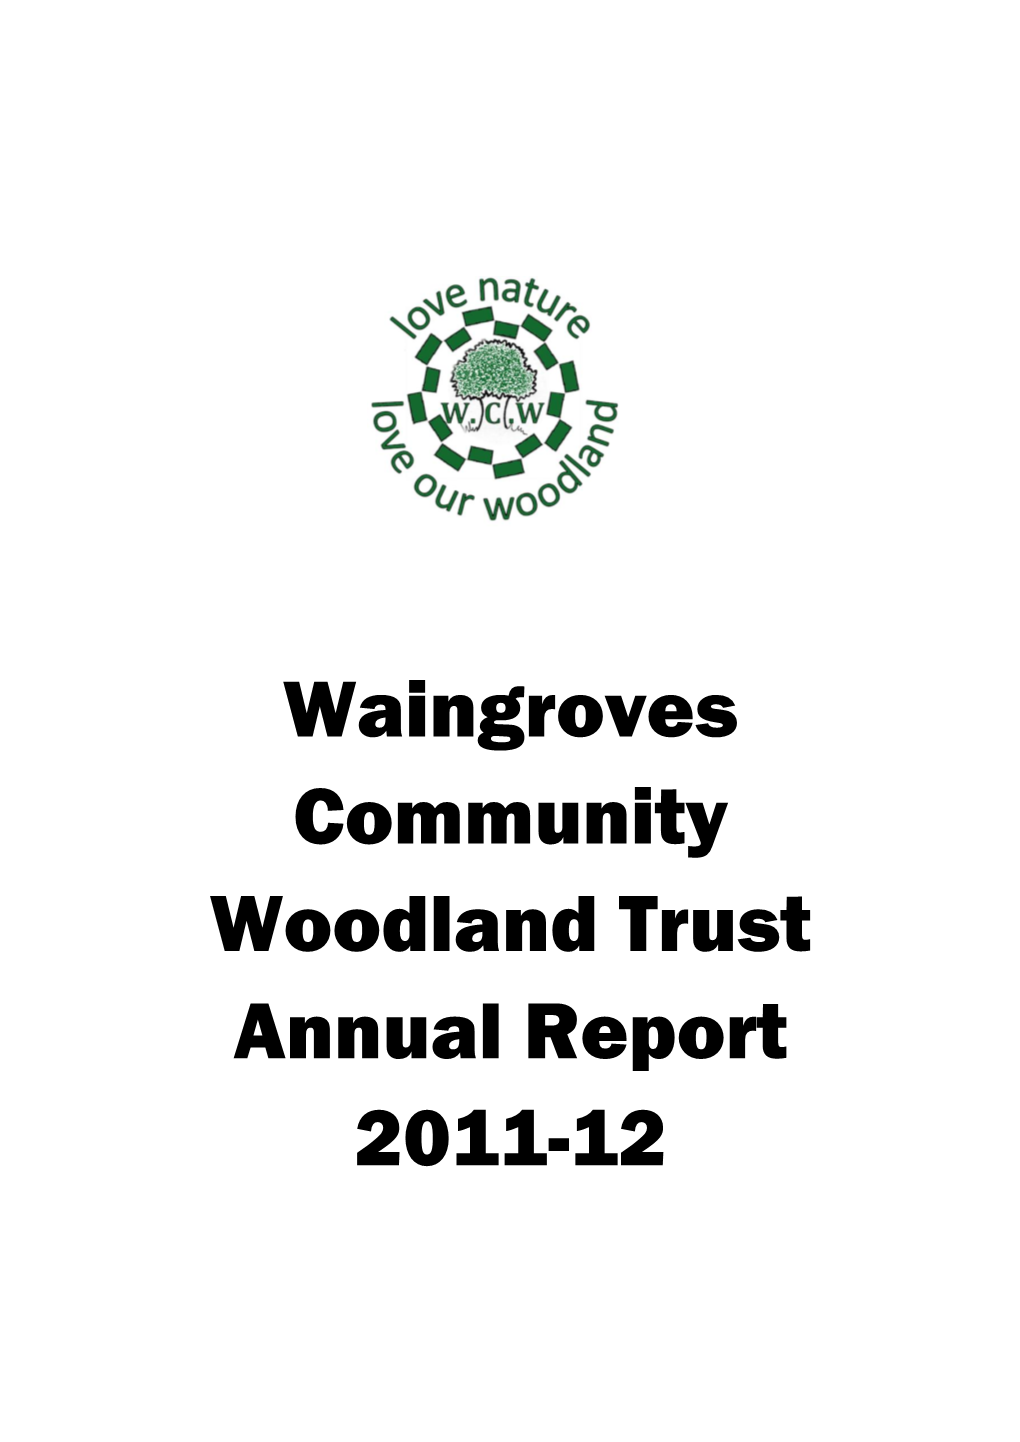 Waingroves Community Woodland Trust Annual Report 2011-12